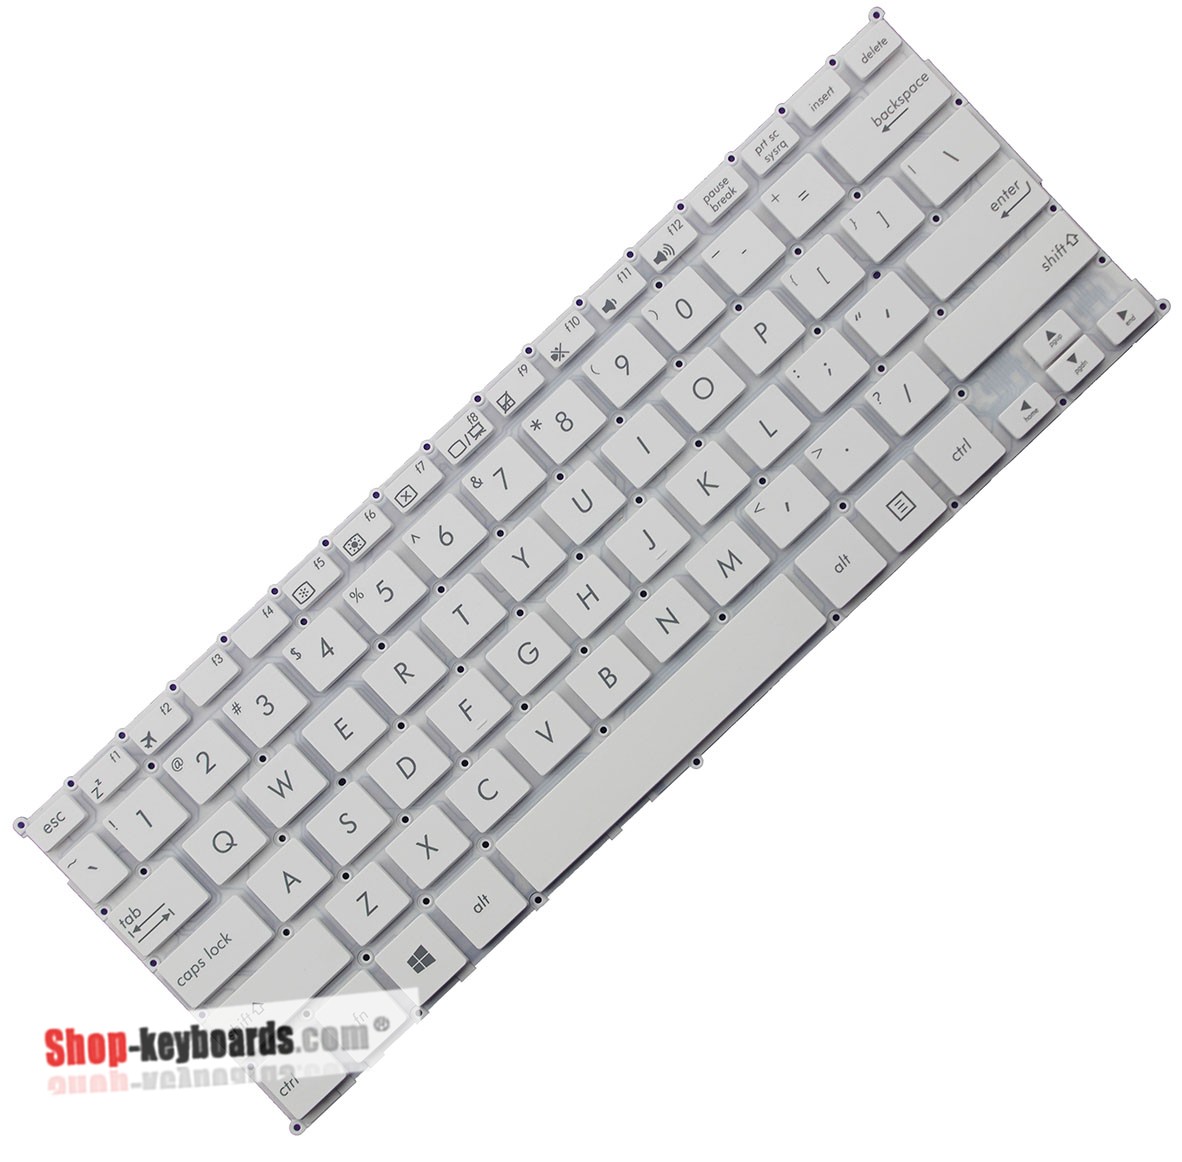 Asus 0KNL0-1122UK00 Keyboard replacement